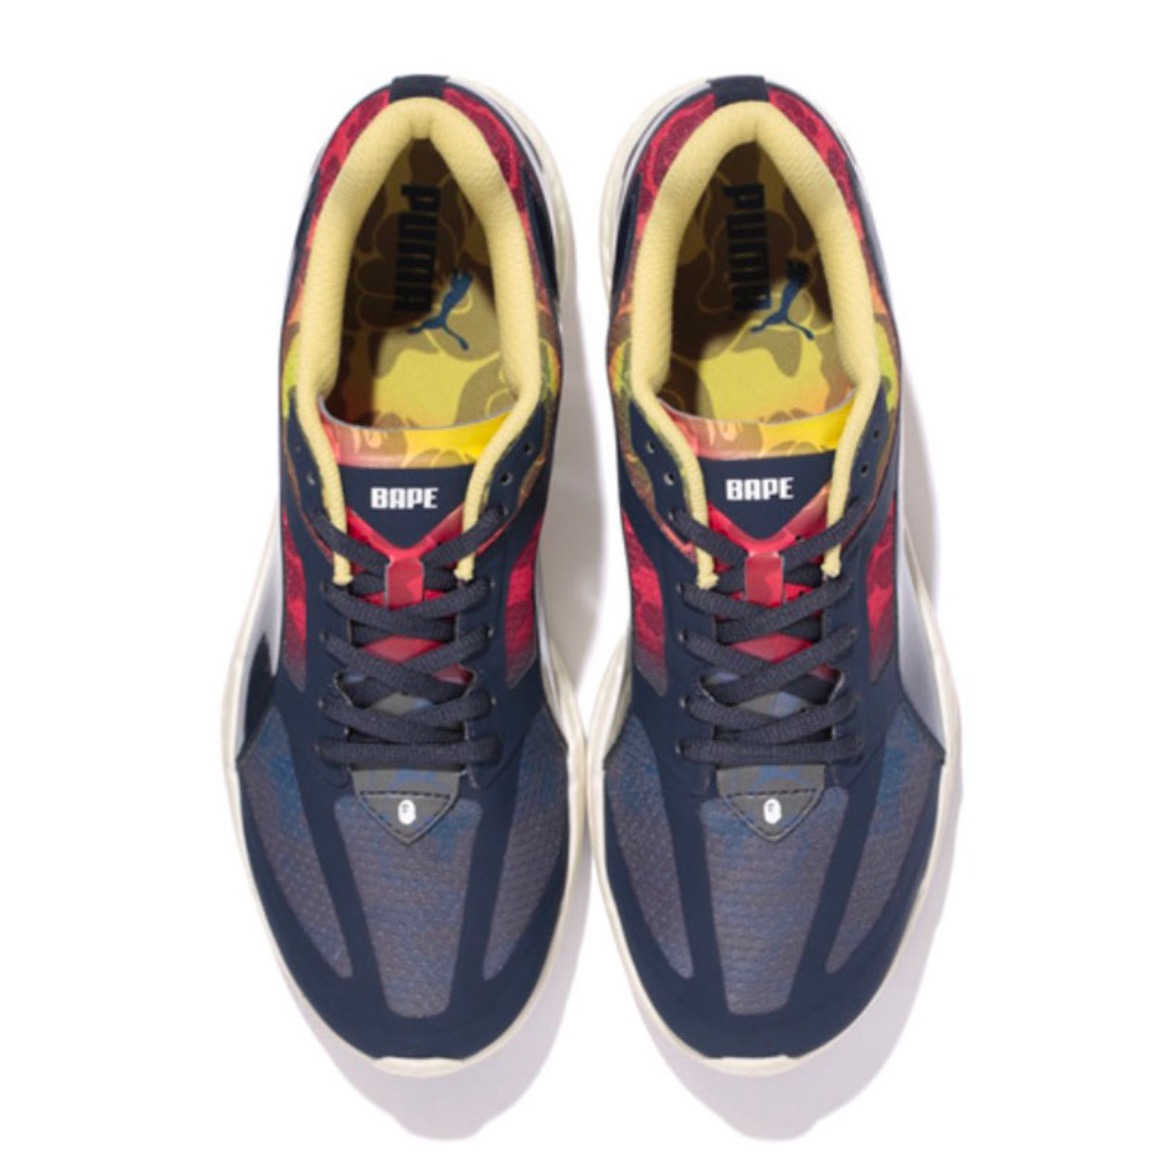 BAPE x PUMA IGNITE 联名跑鞋男运动鞋渐变迷彩舒适潮款日本代购 - 图2